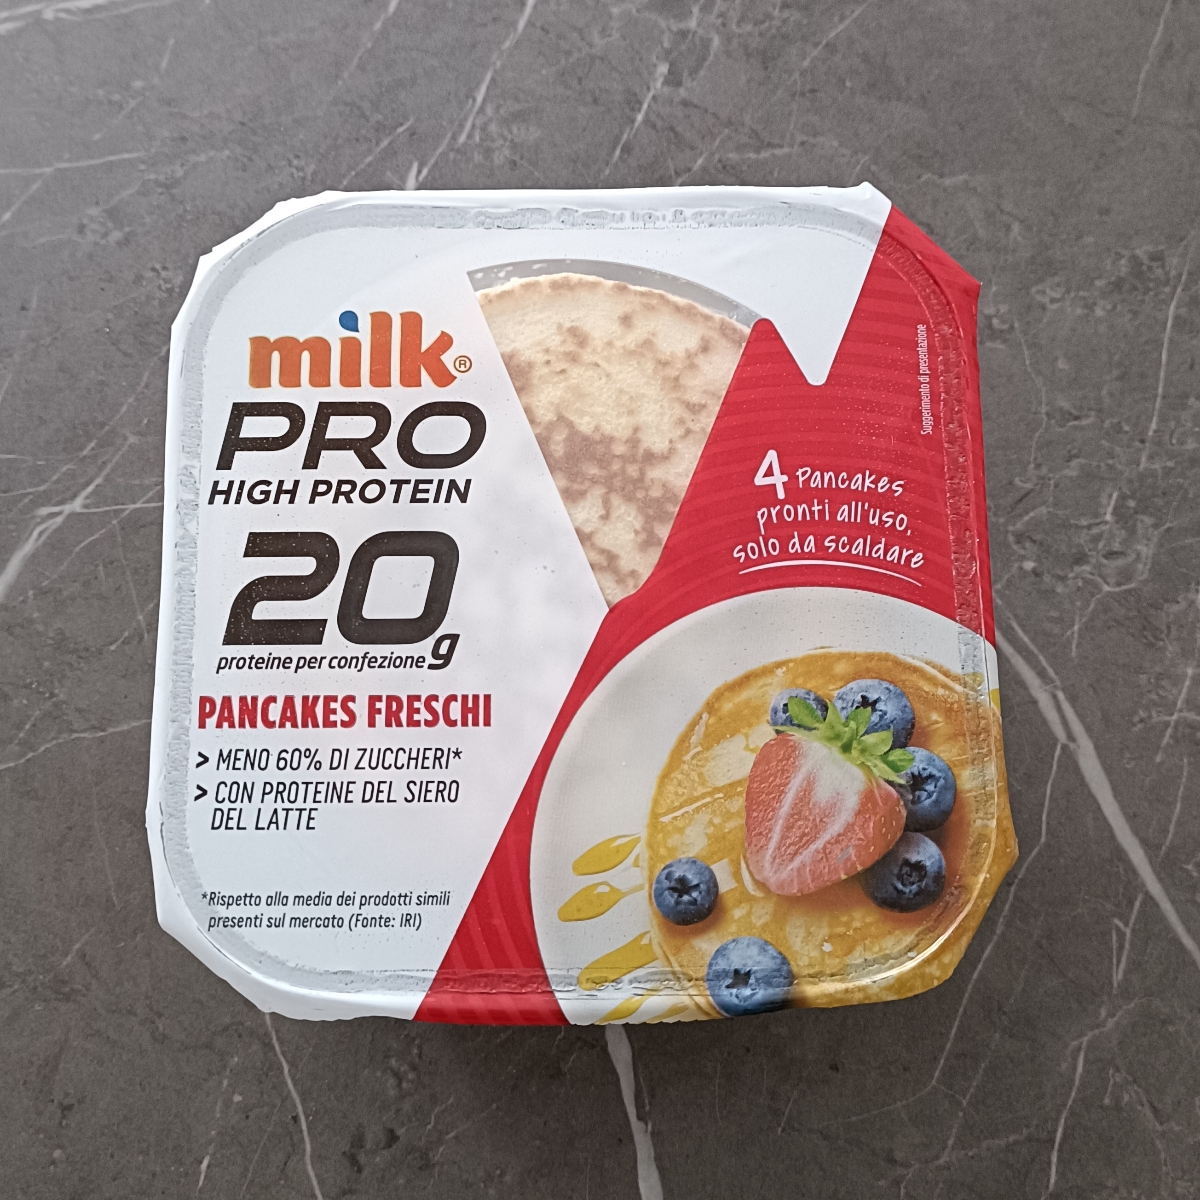 Milk Pro Pancake Reviews